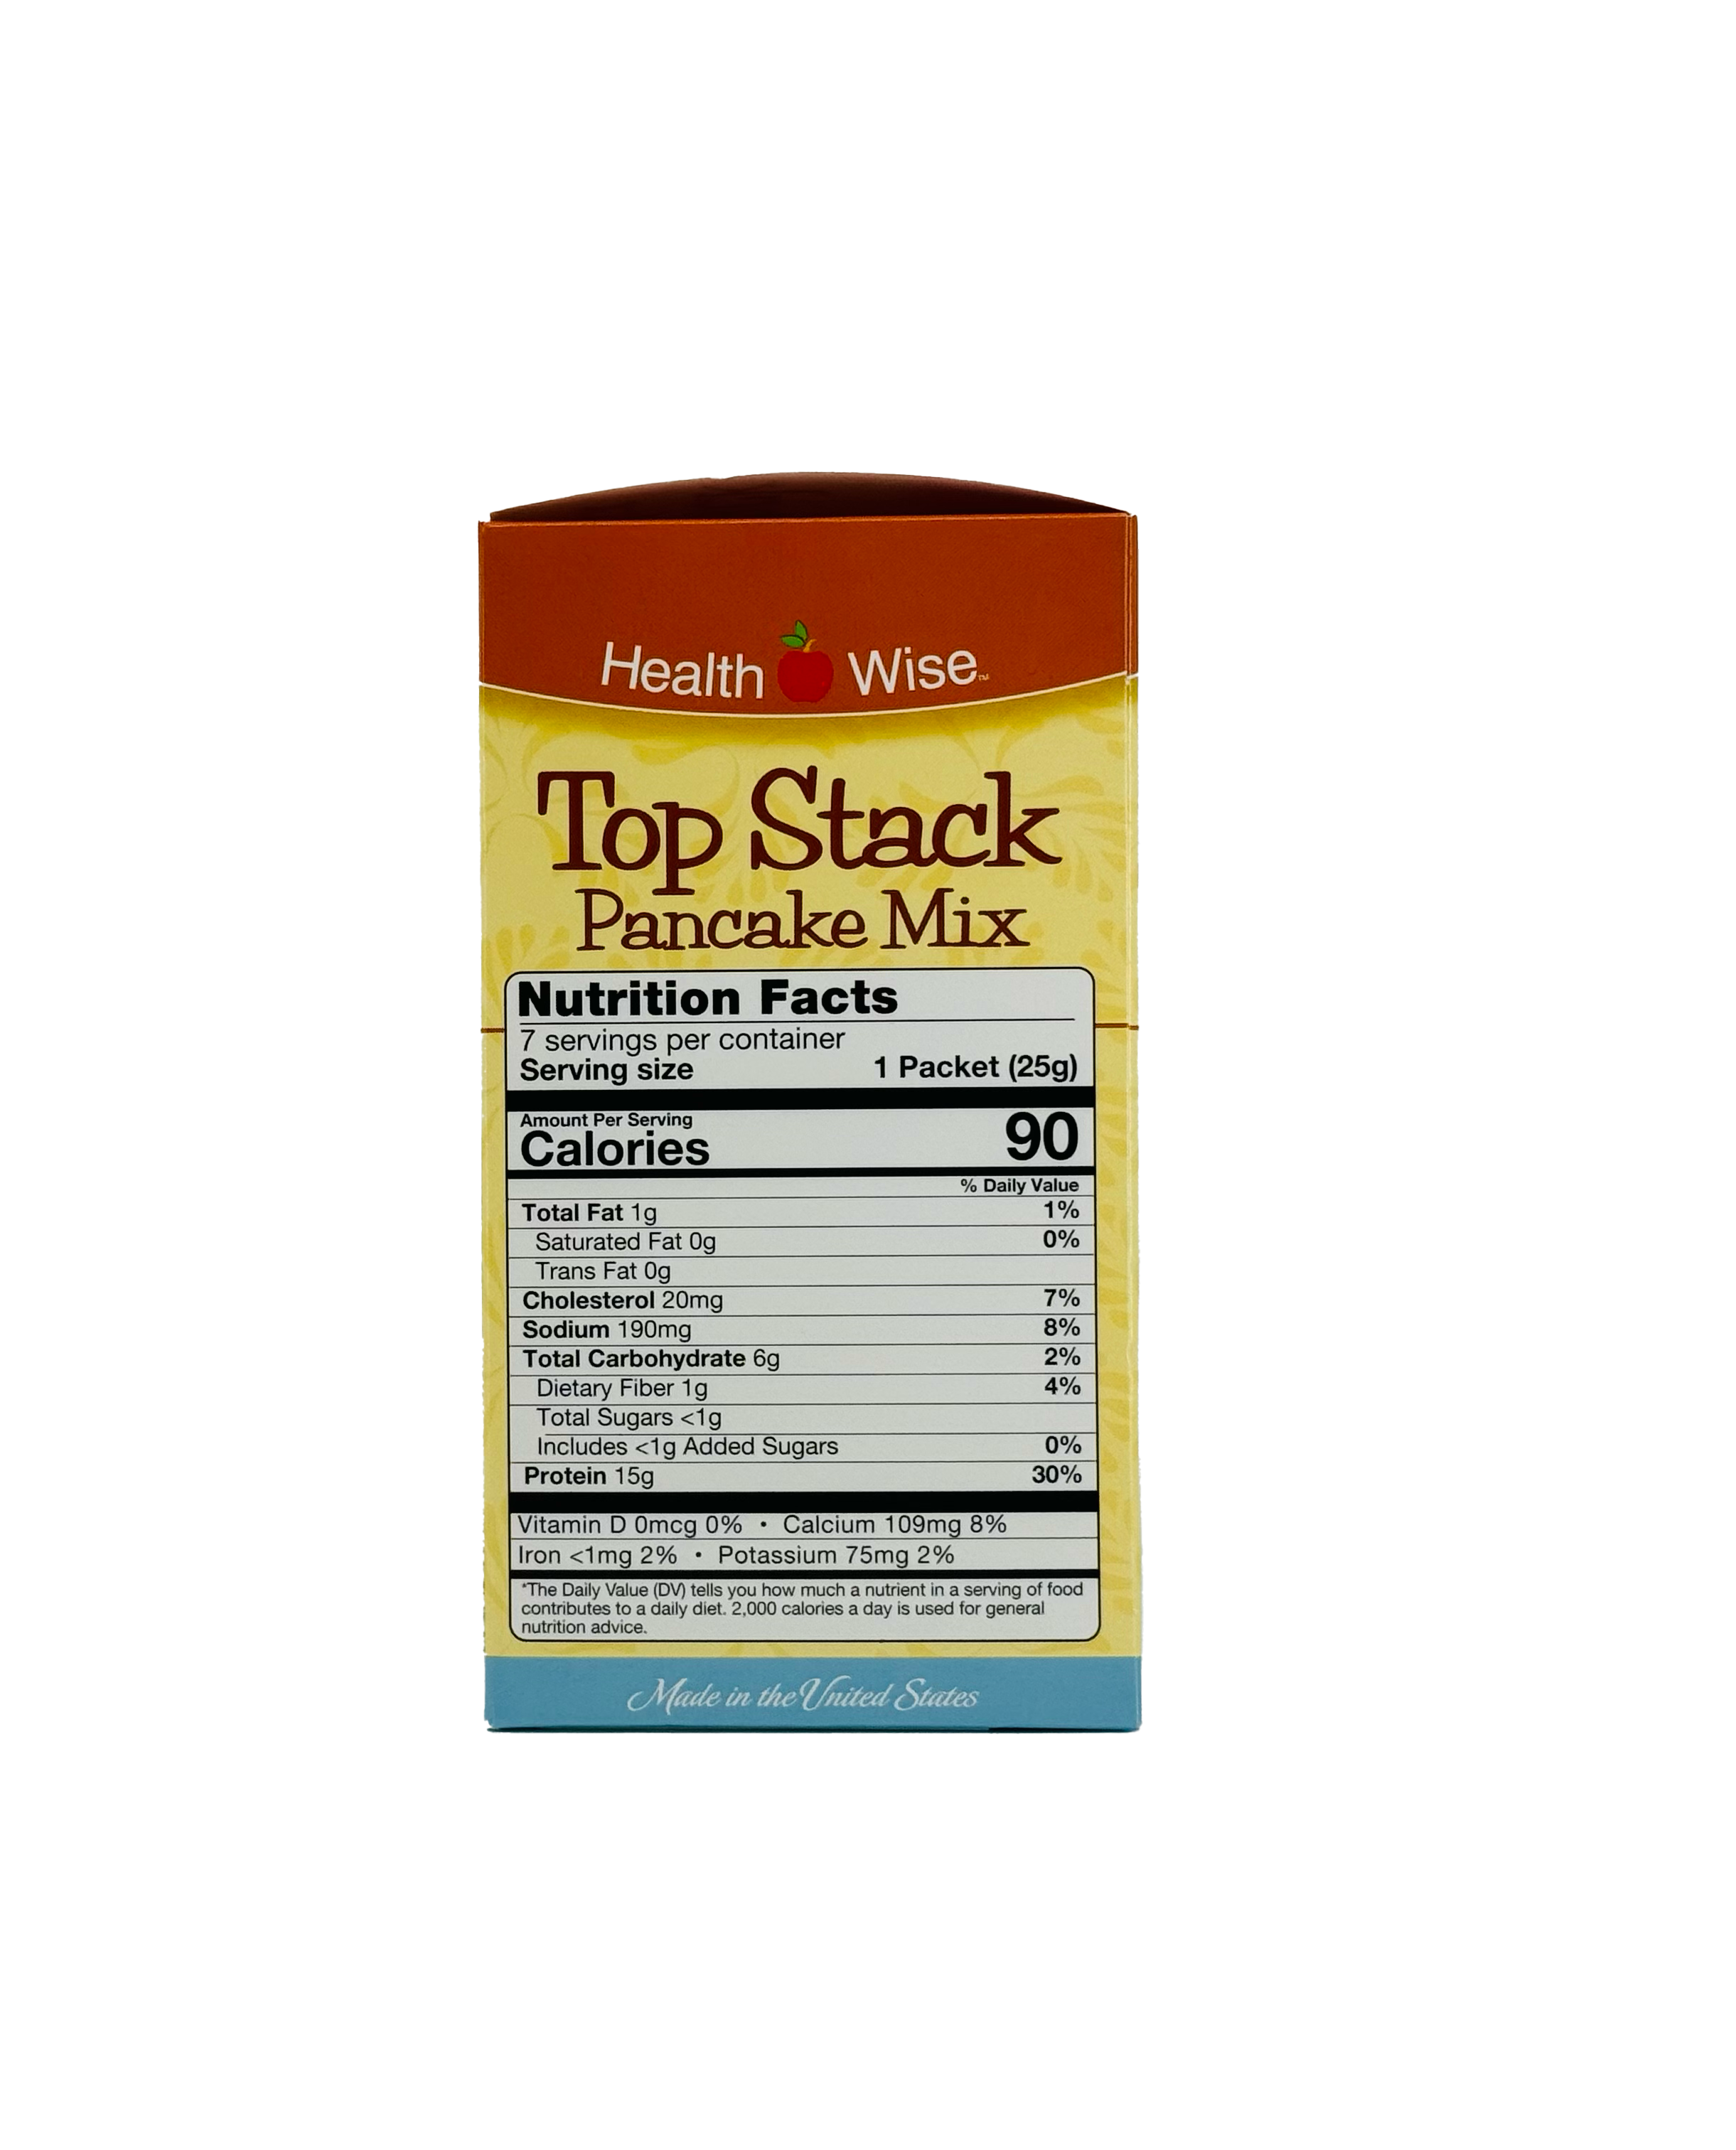 Healthwise Top Stack Golden Delicious Plain Pancake